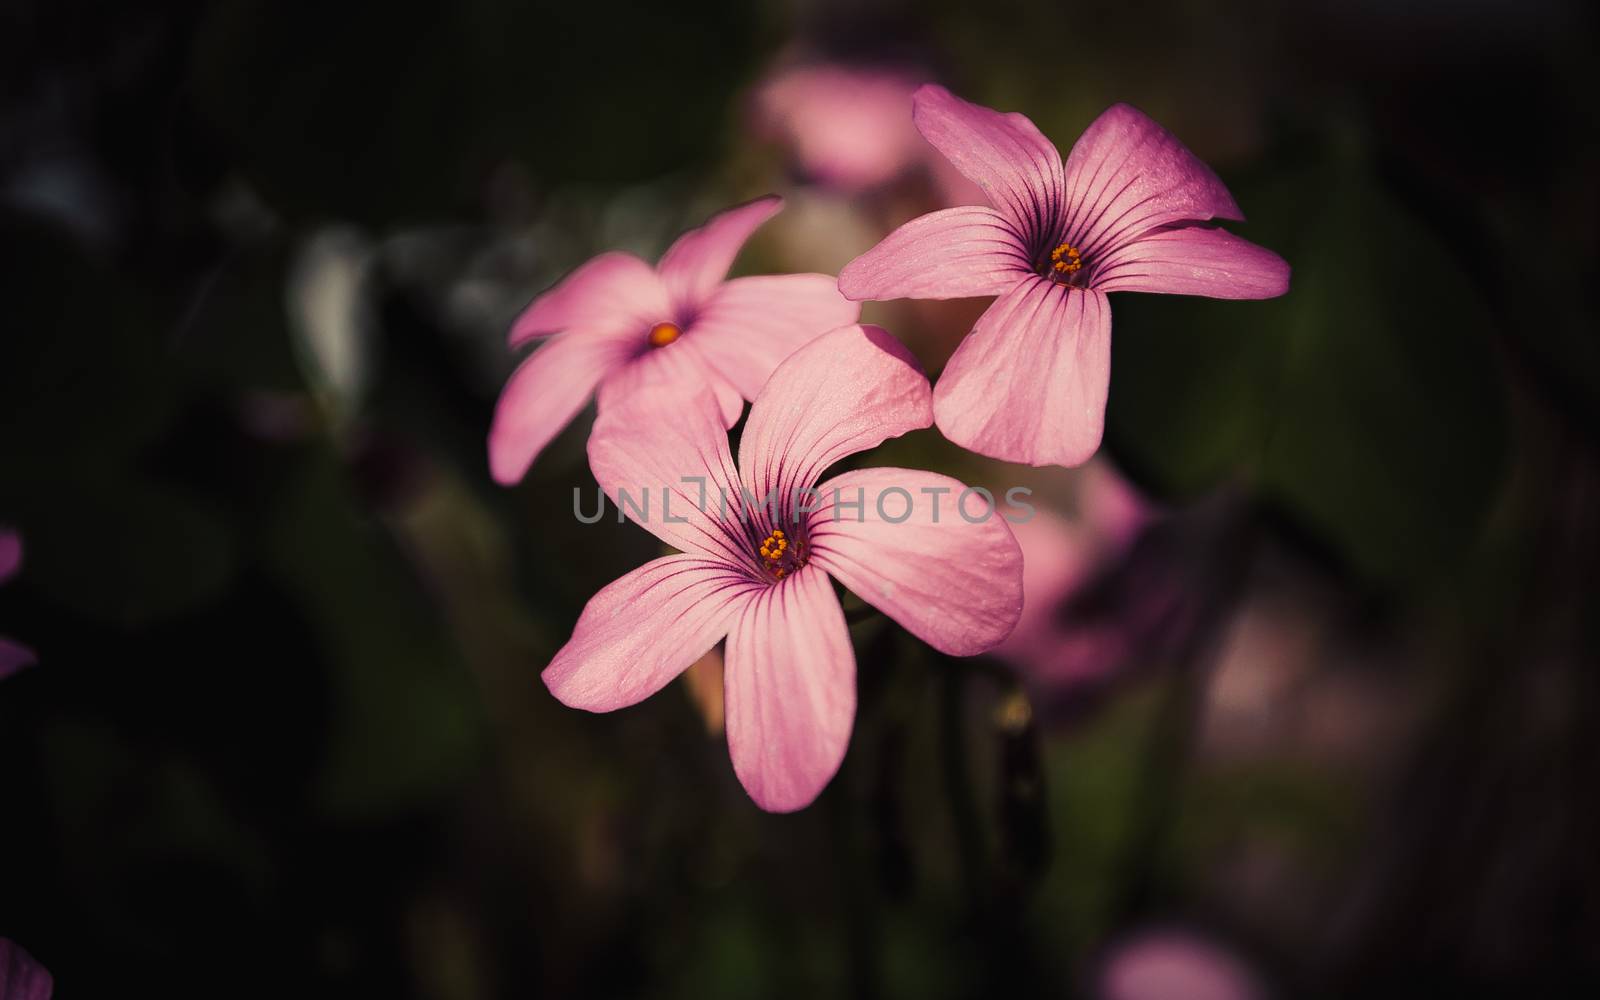 pink oxalis flower close up by Seva_blsv